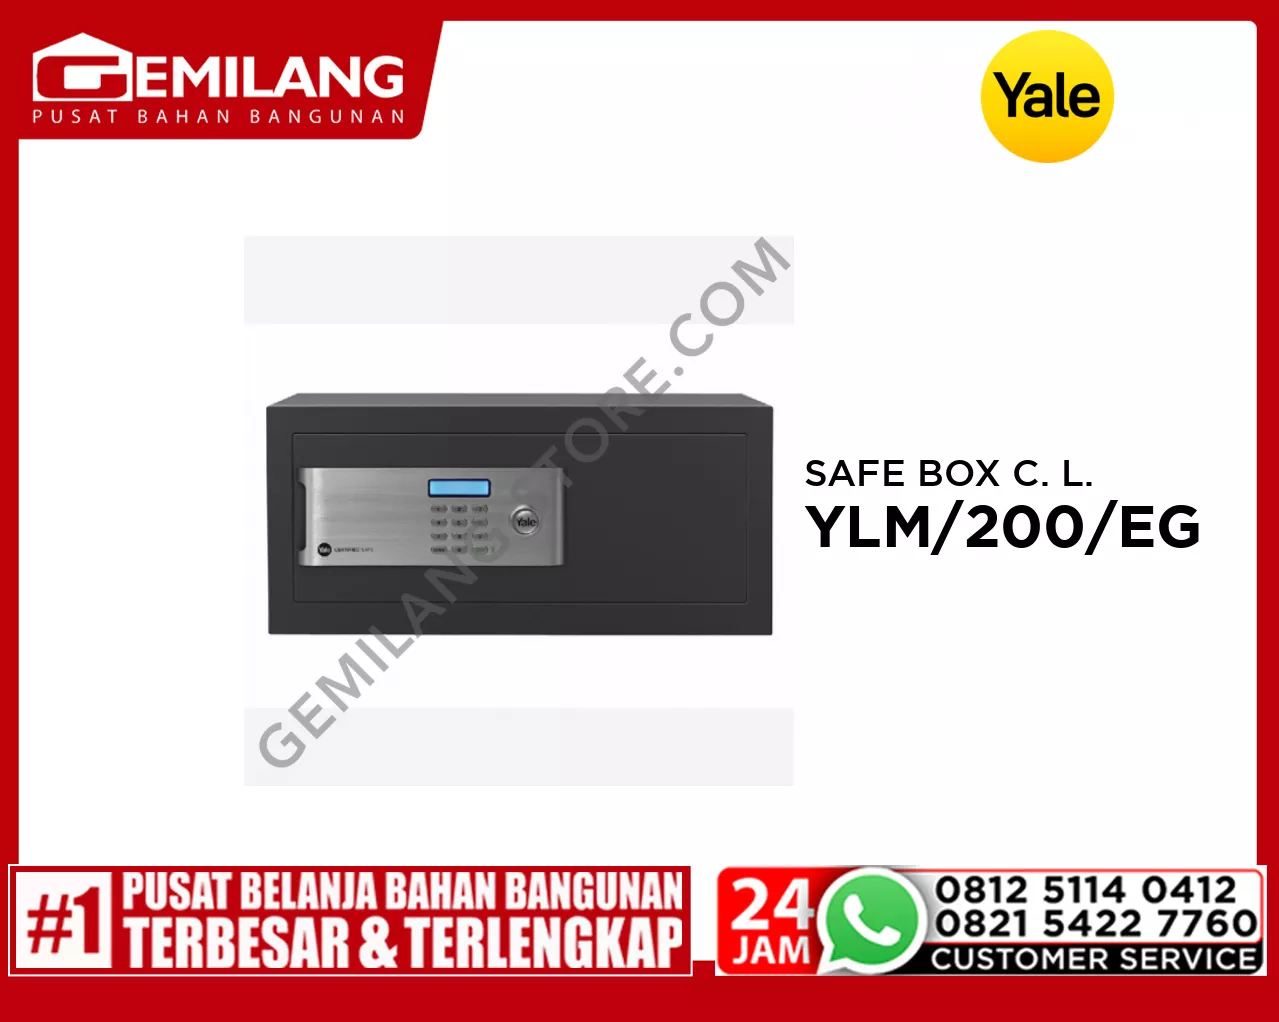 YALE SAFE BOX CERTIFIED LAPTOP YLM/200/EG1